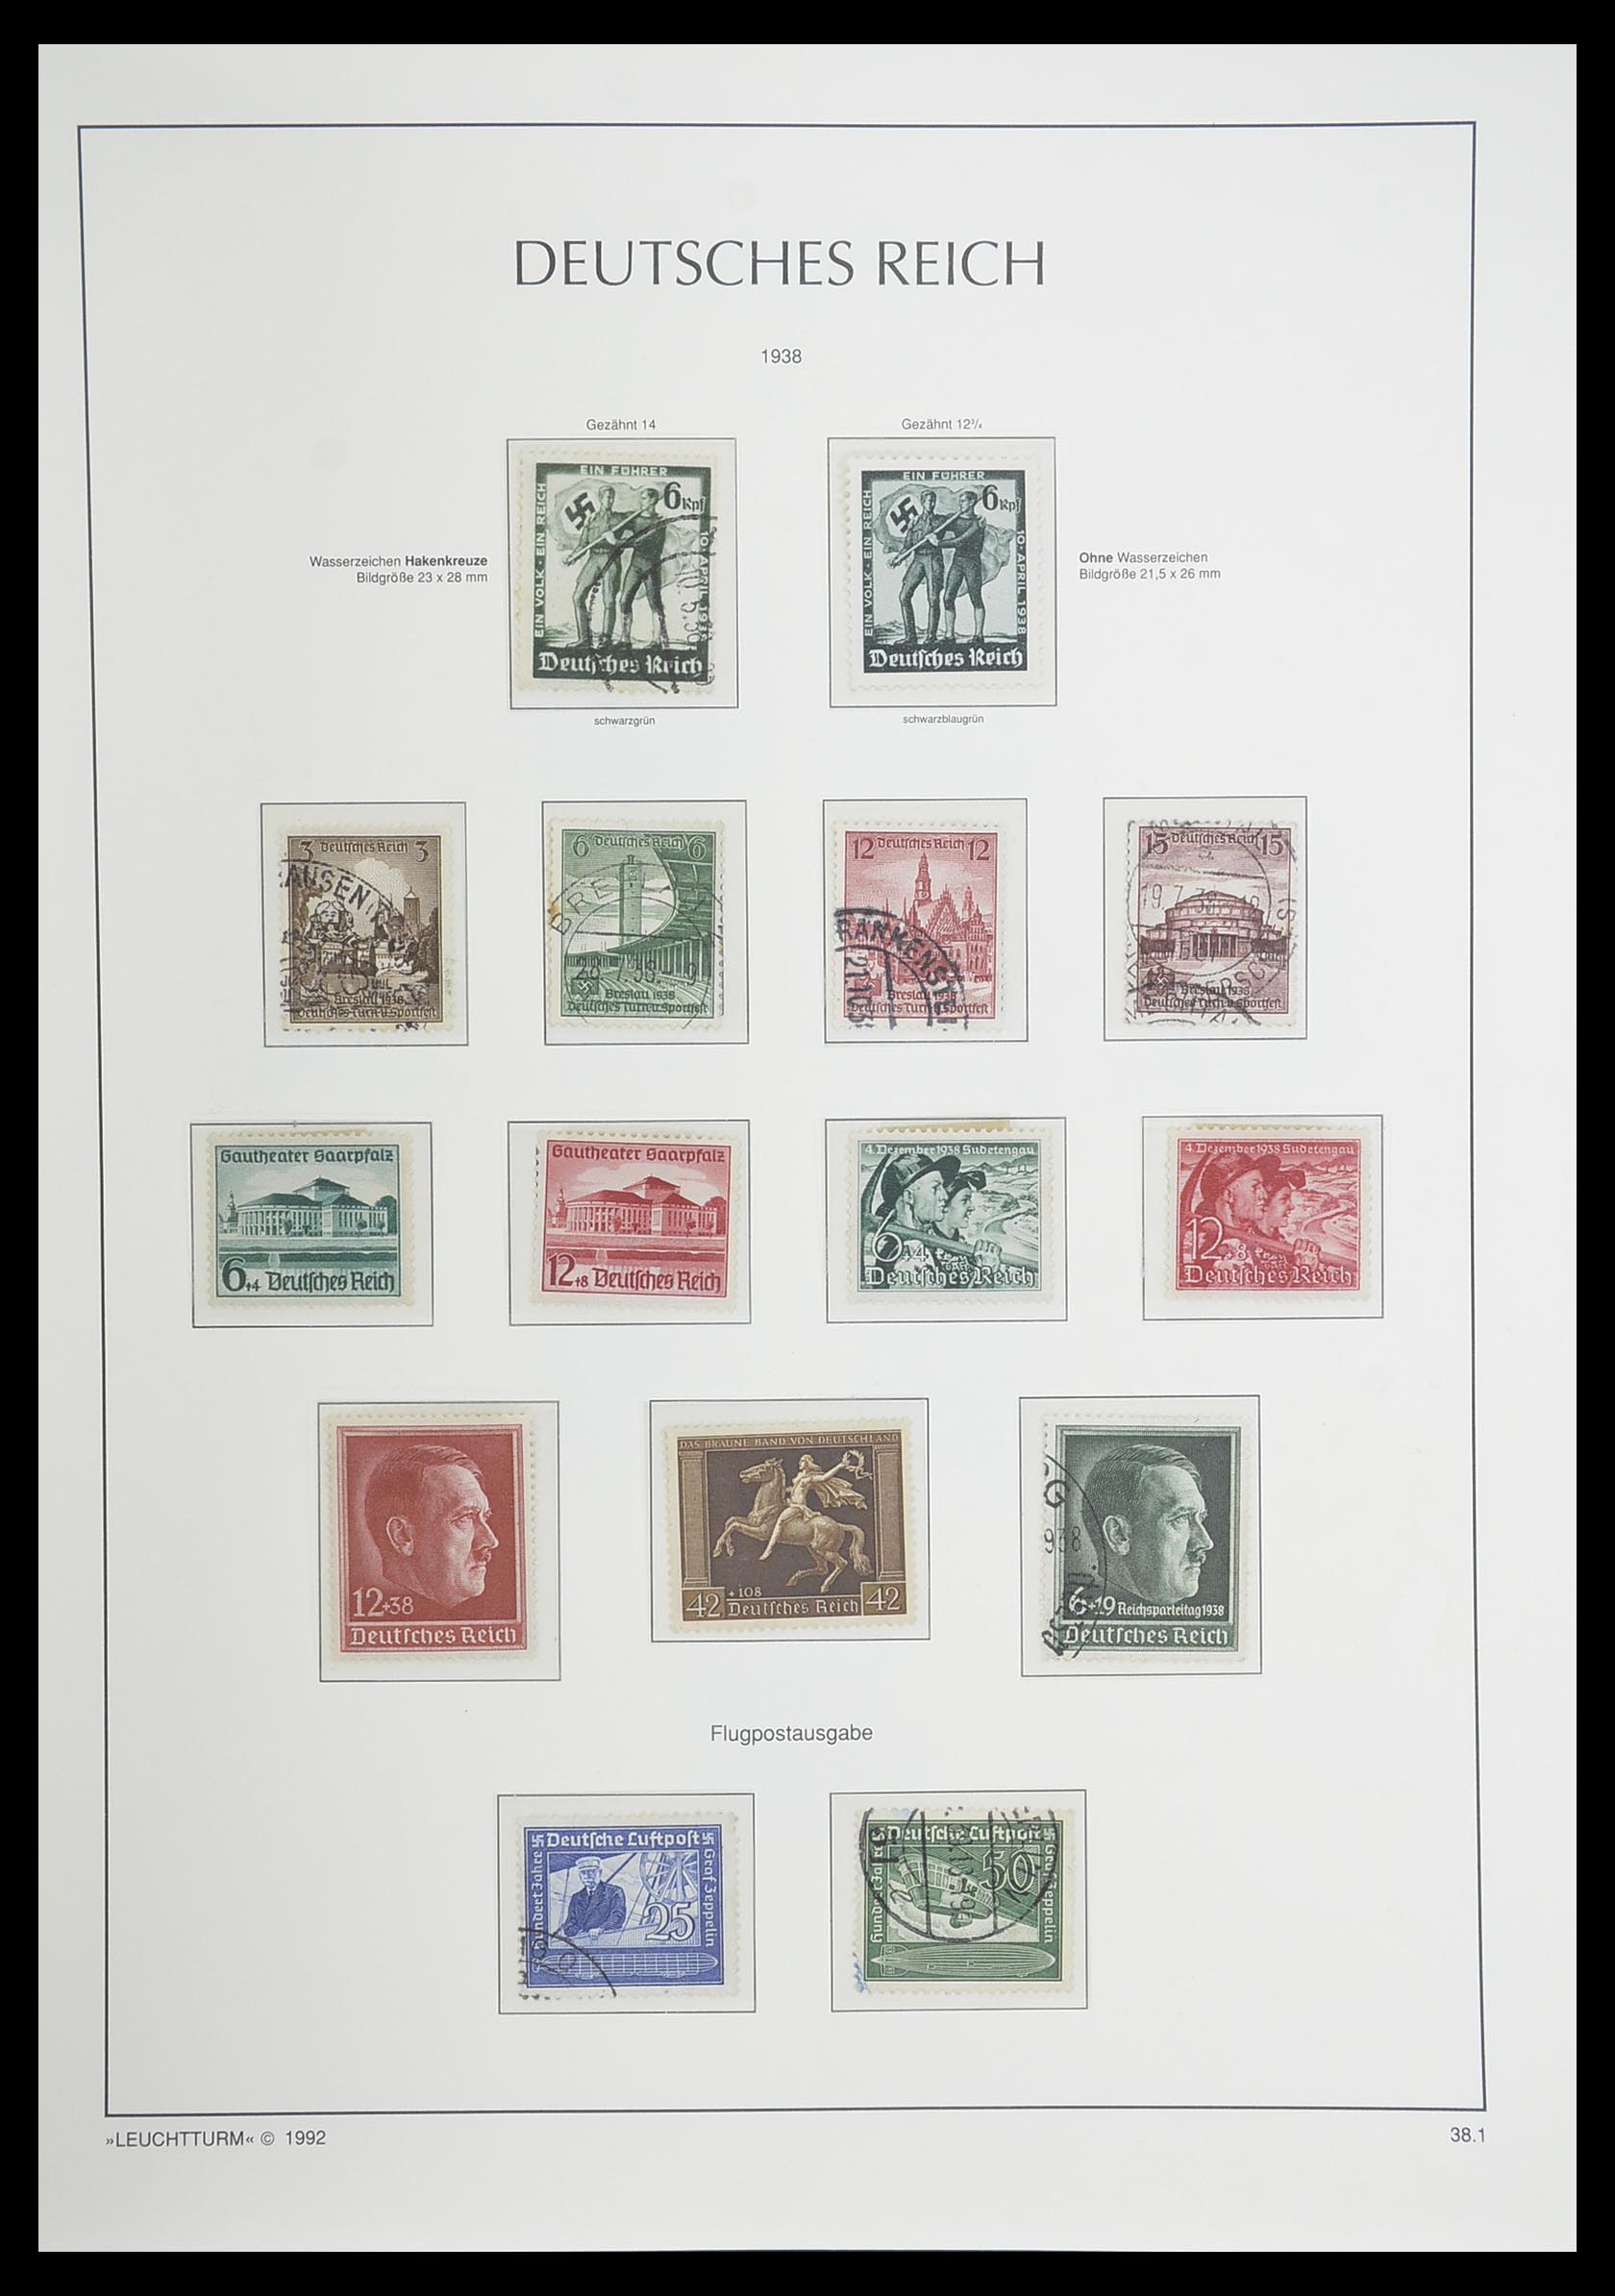 33455 073 - Stamp collection 33455 German Reich 1872-1945.